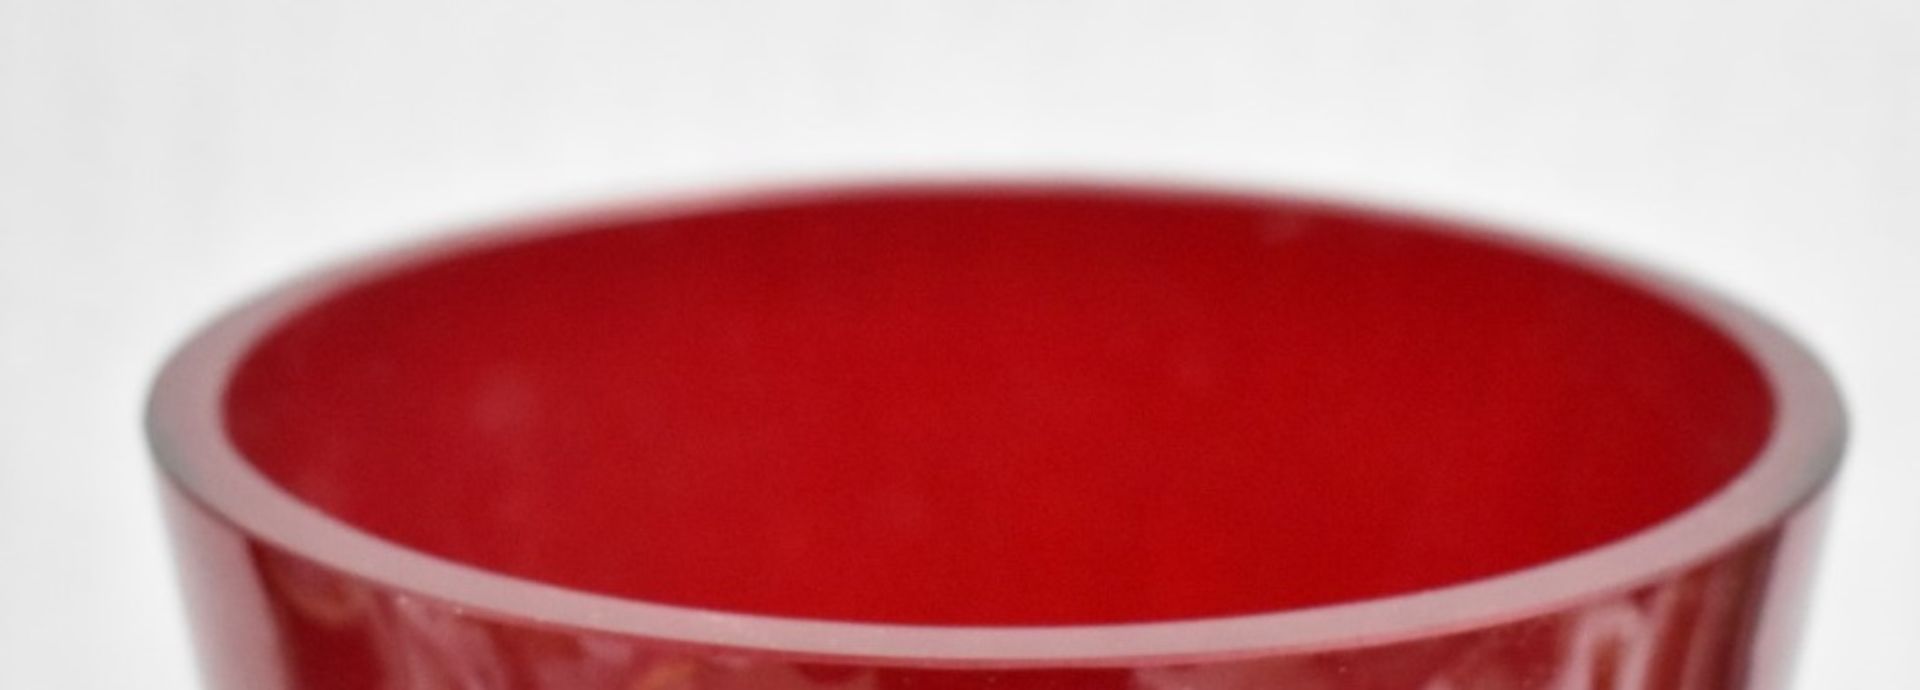 1 x Large Decorative Red Glass Vase - Dimensions H60 x Ø30cm - Ref: CNT788/WH2/C23 - CL845 - NO - Image 2 of 2